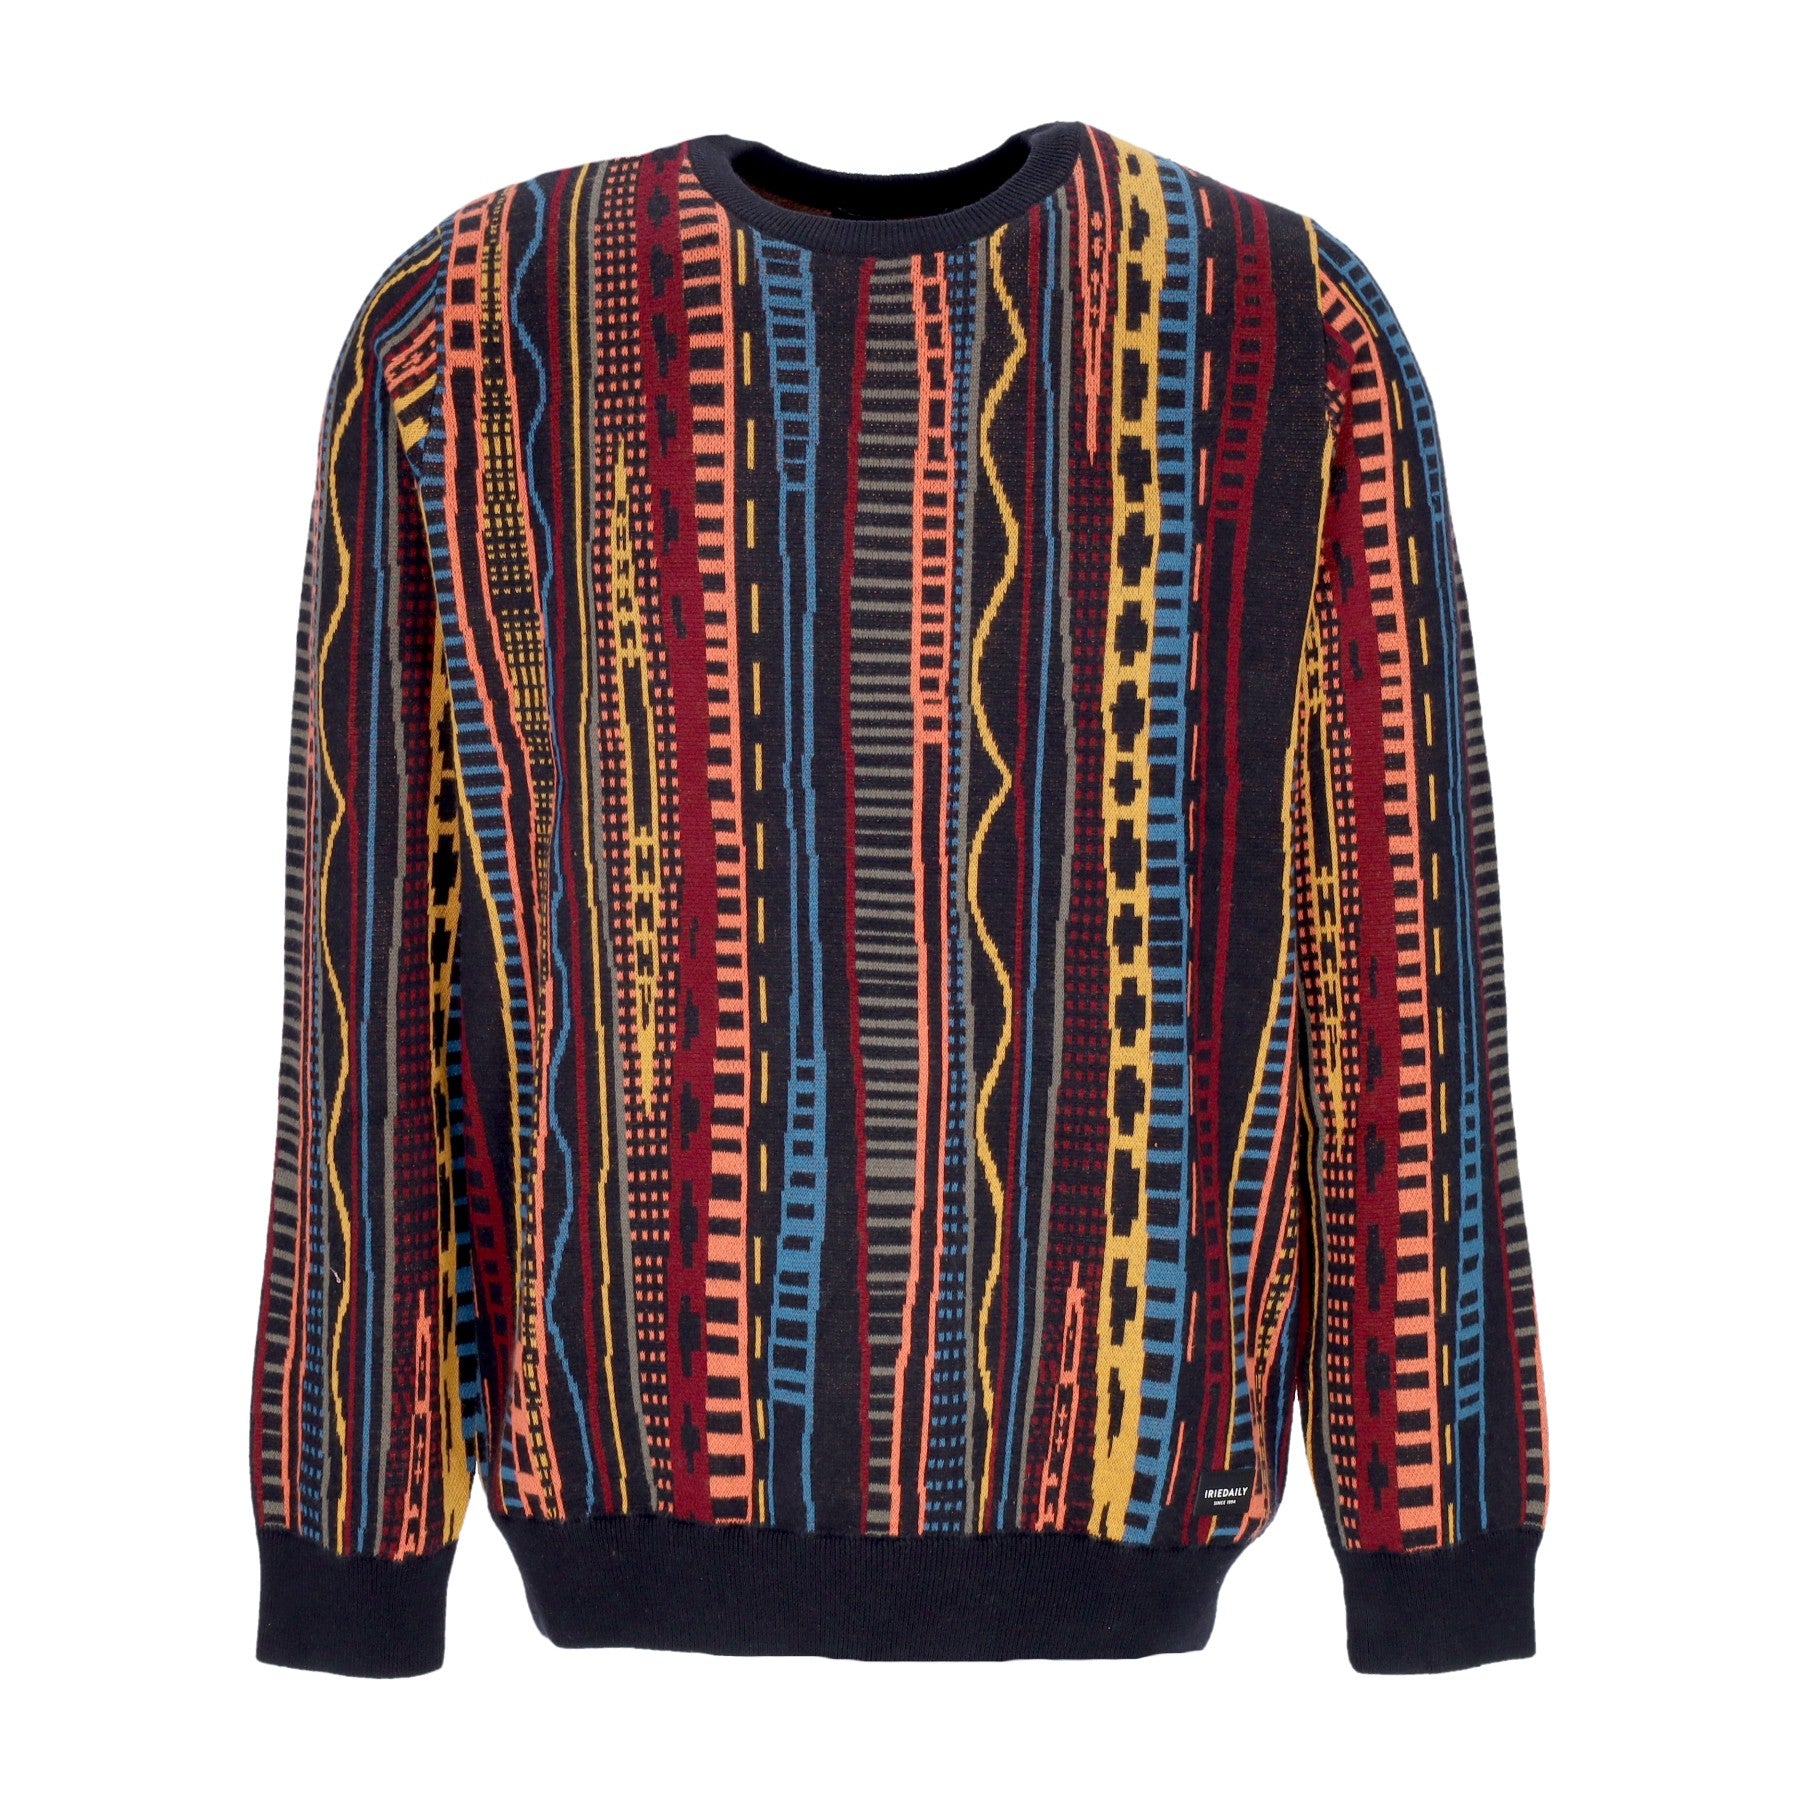 Theodore Knit Men's Sweater Black